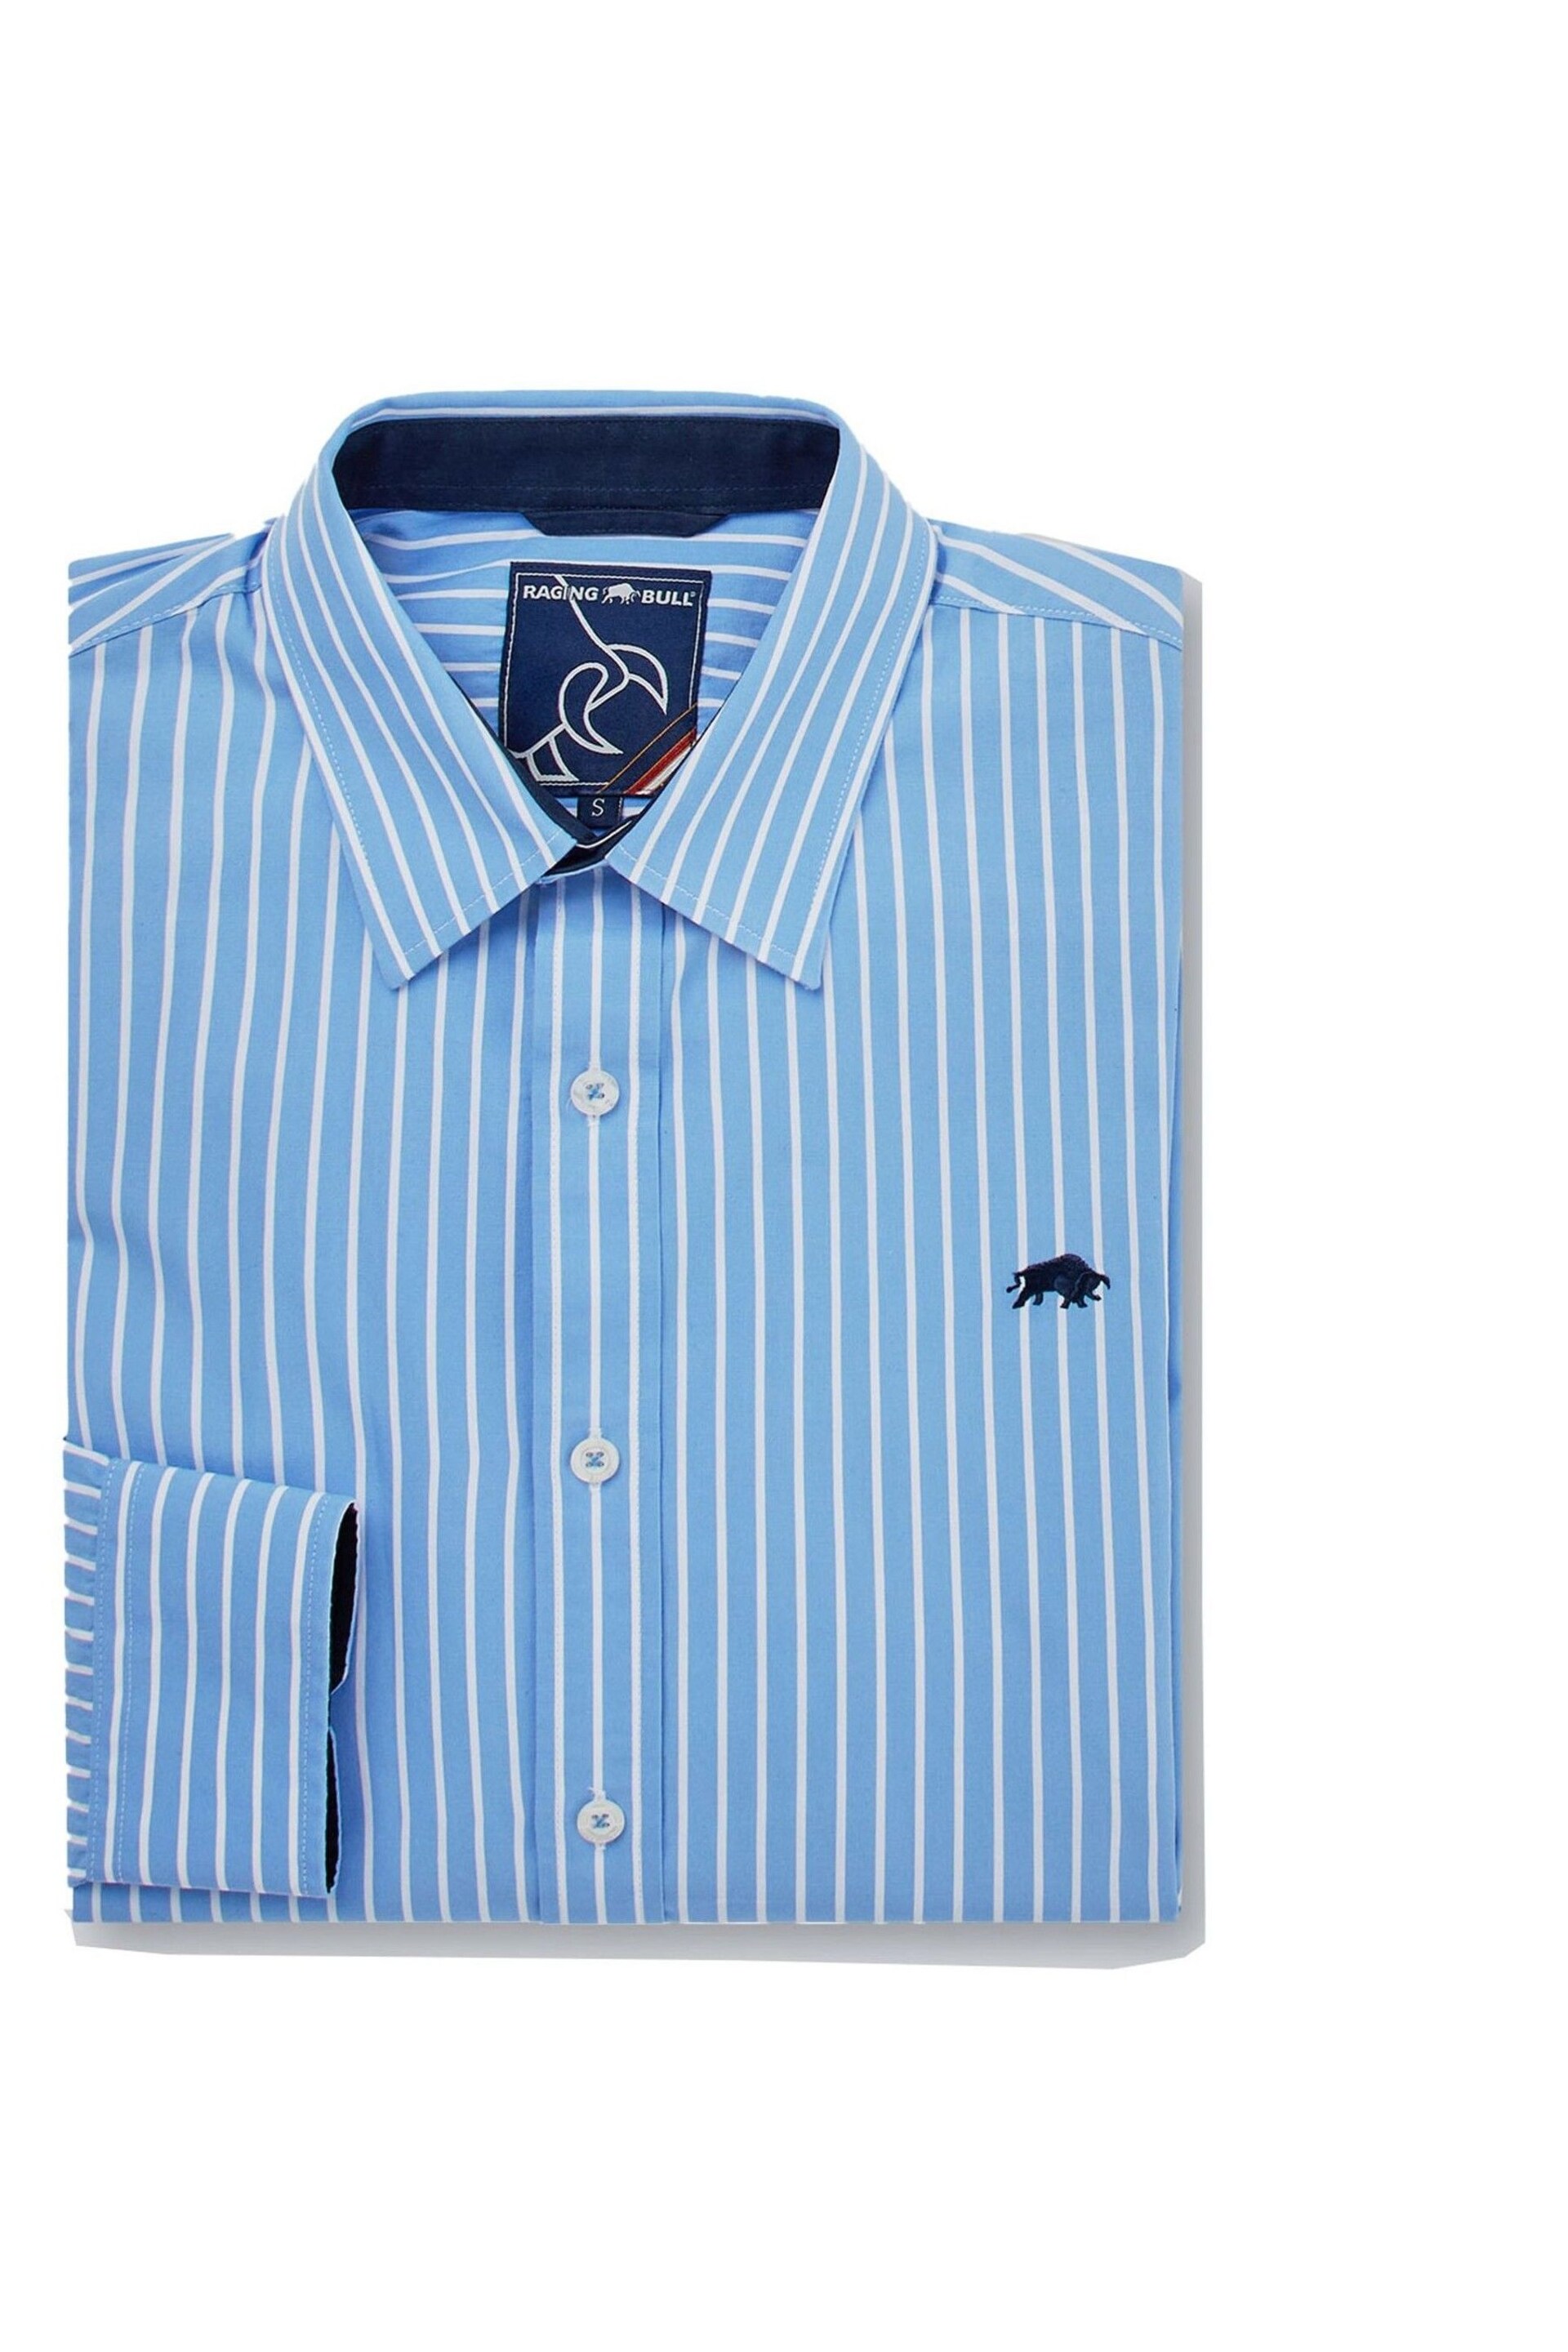 Raging Bull Blue Classic Long Sleeve Stripe Shirt - Image 6 of 8